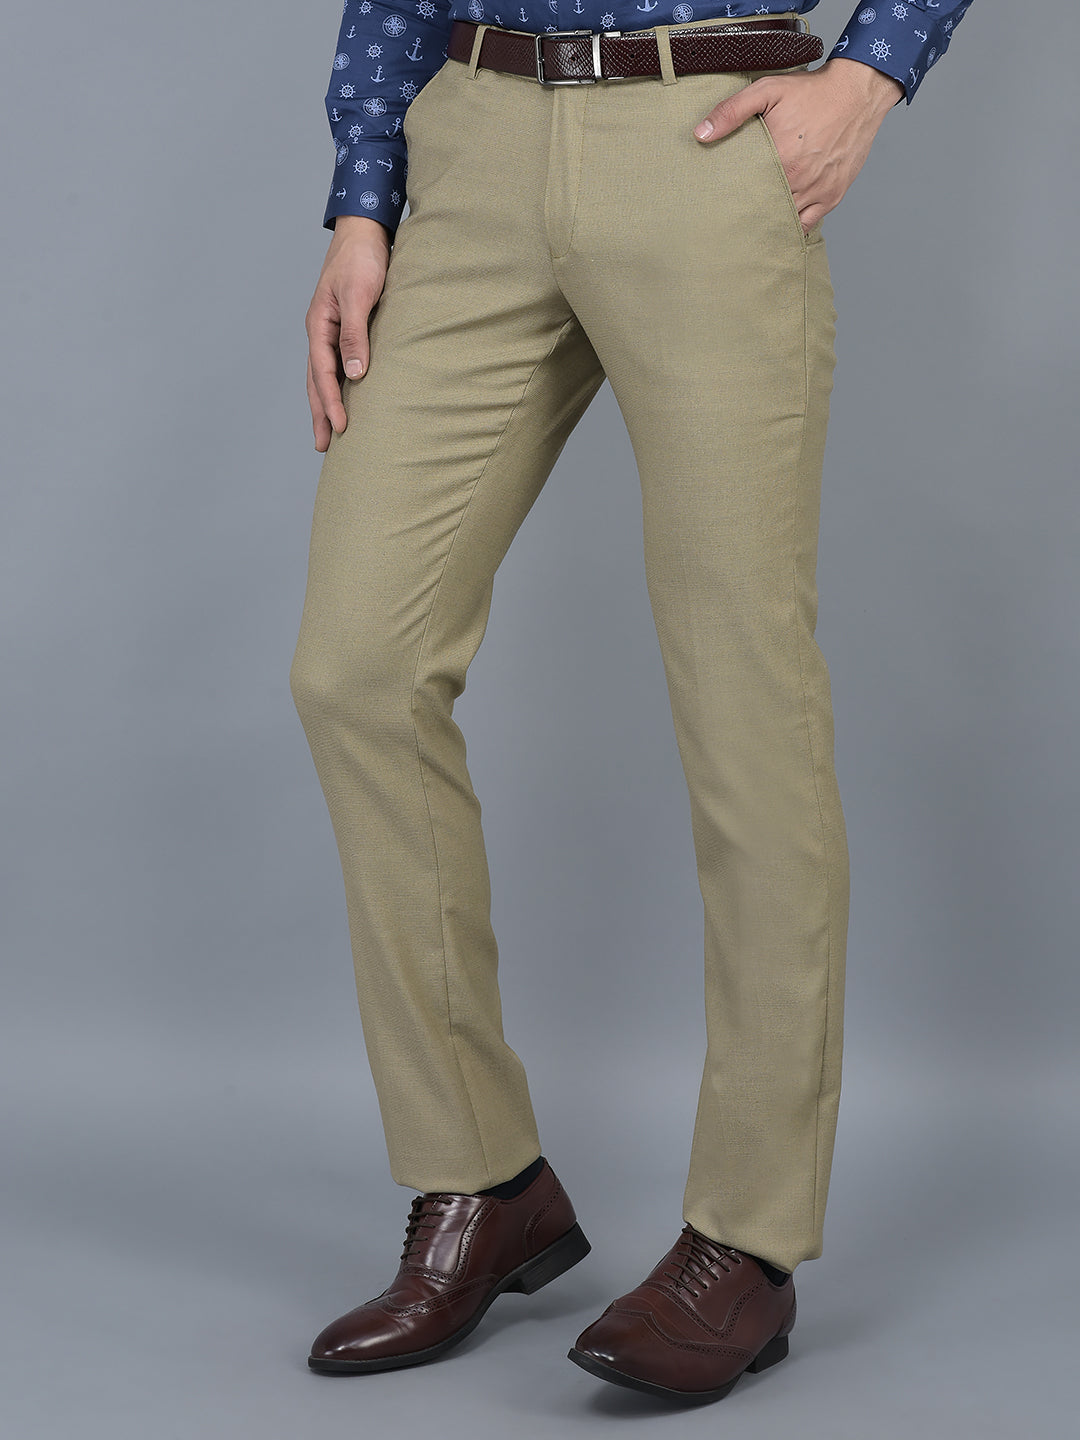 Buy VAN HEUSEN Khaki Womens 3 Pocket Solid Formal Pants  Shoppers Stop